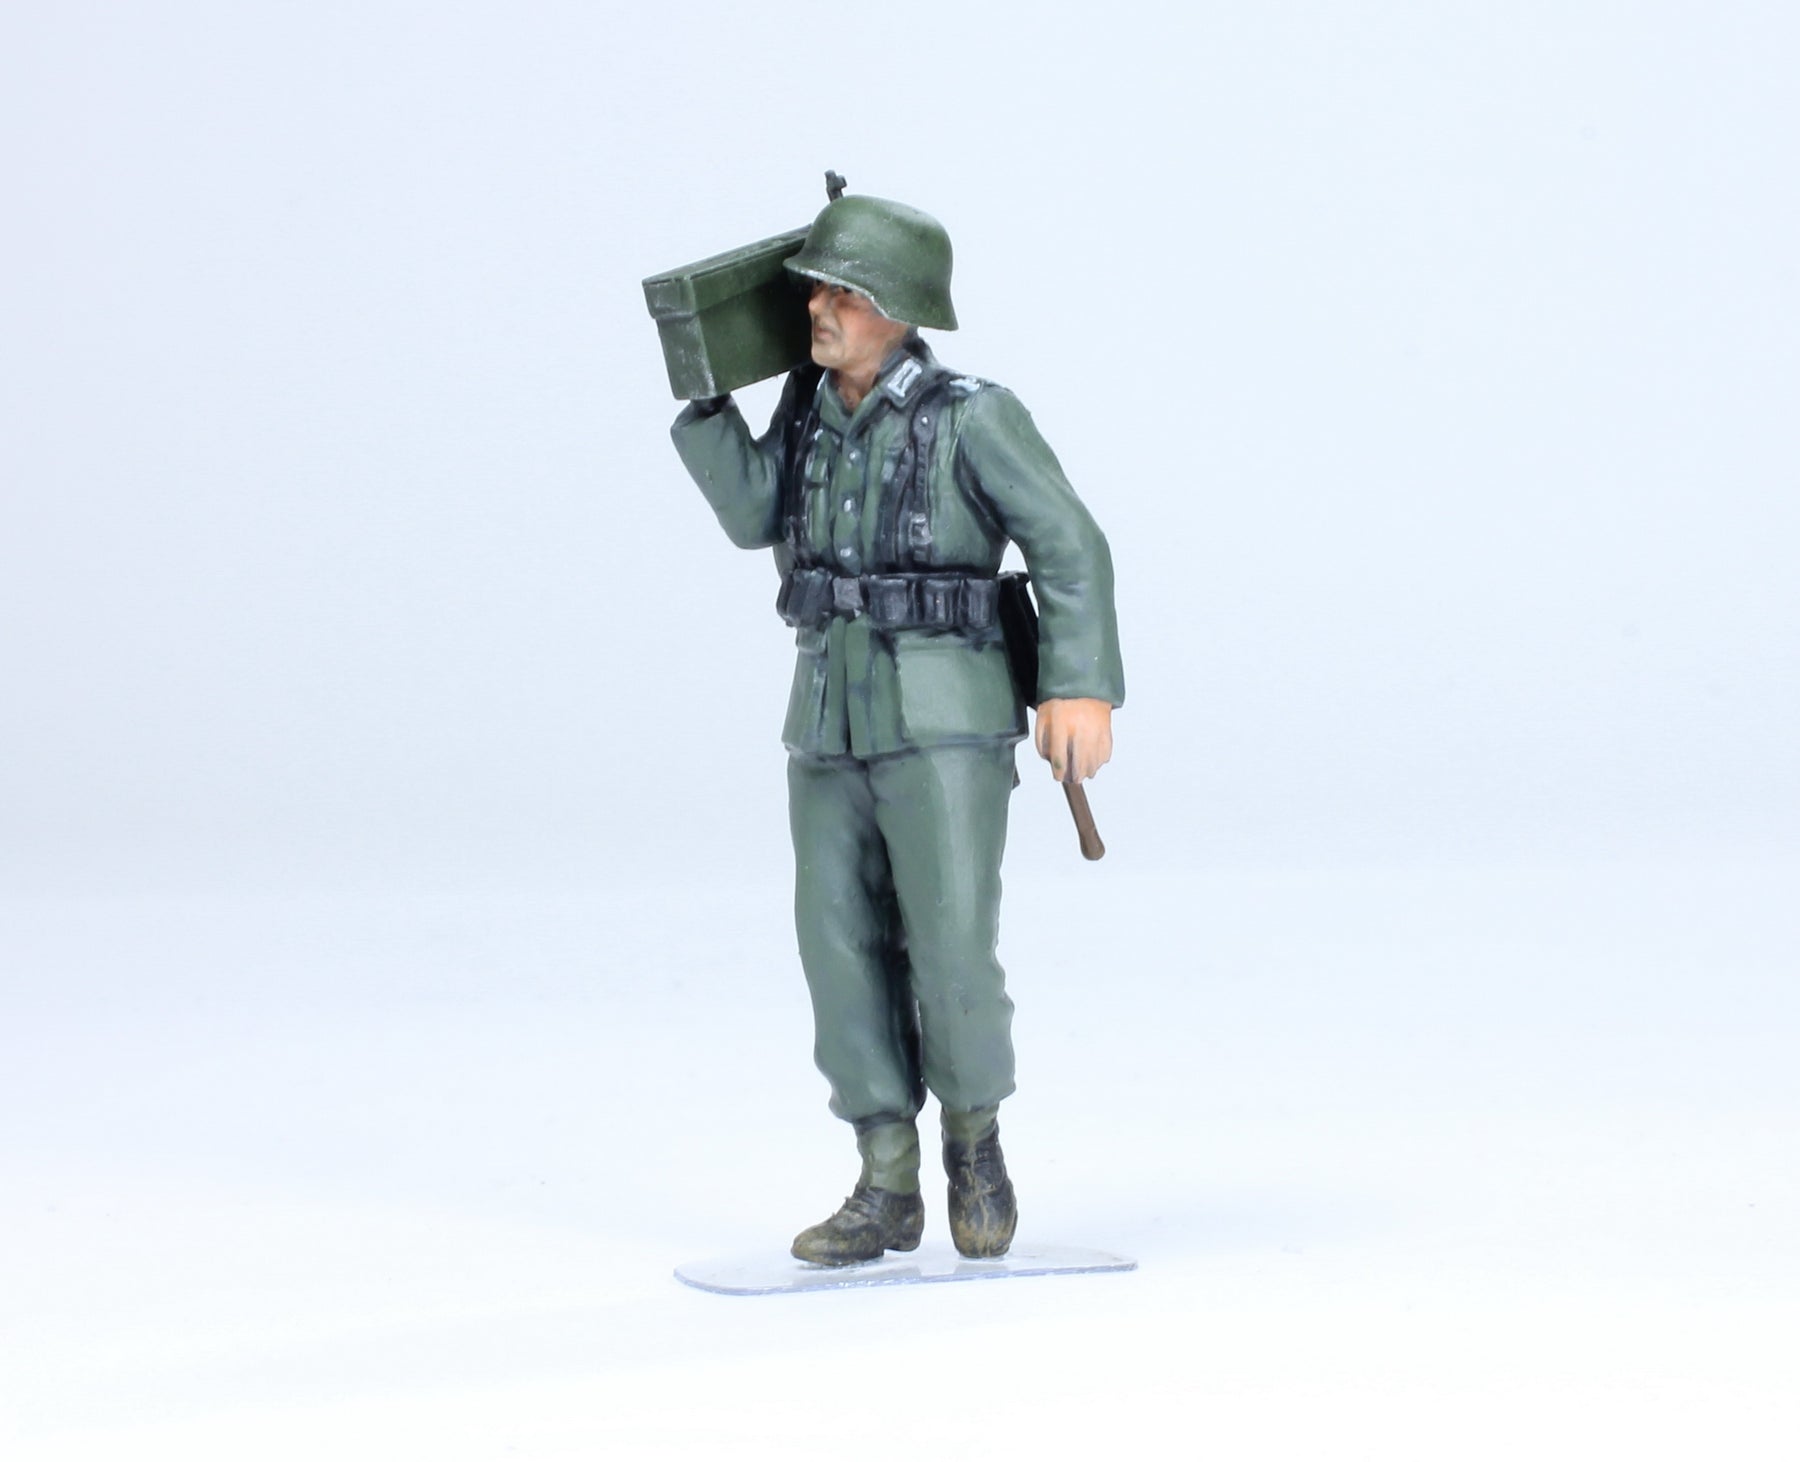 Tamiya German Infantry Figure Set Mid-WWII Kit 35371 Scale 1/35